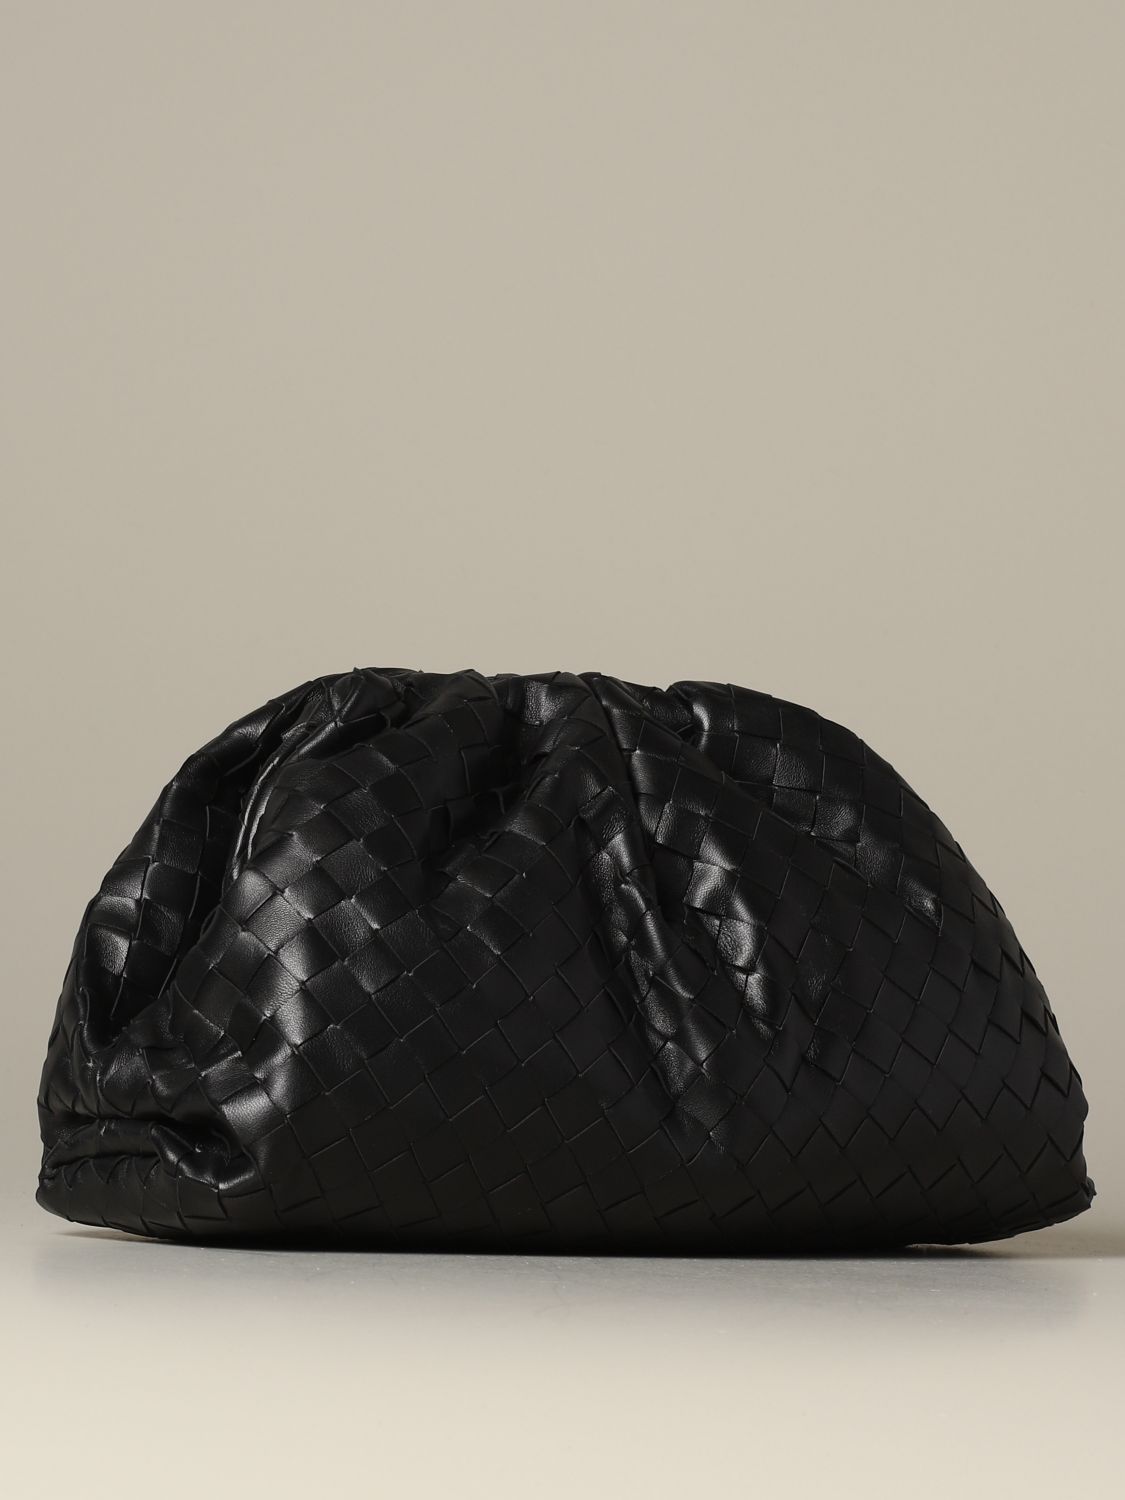 BOTTEGA VENETA: The pouch clutch in woven leather - Black | Bottega ...